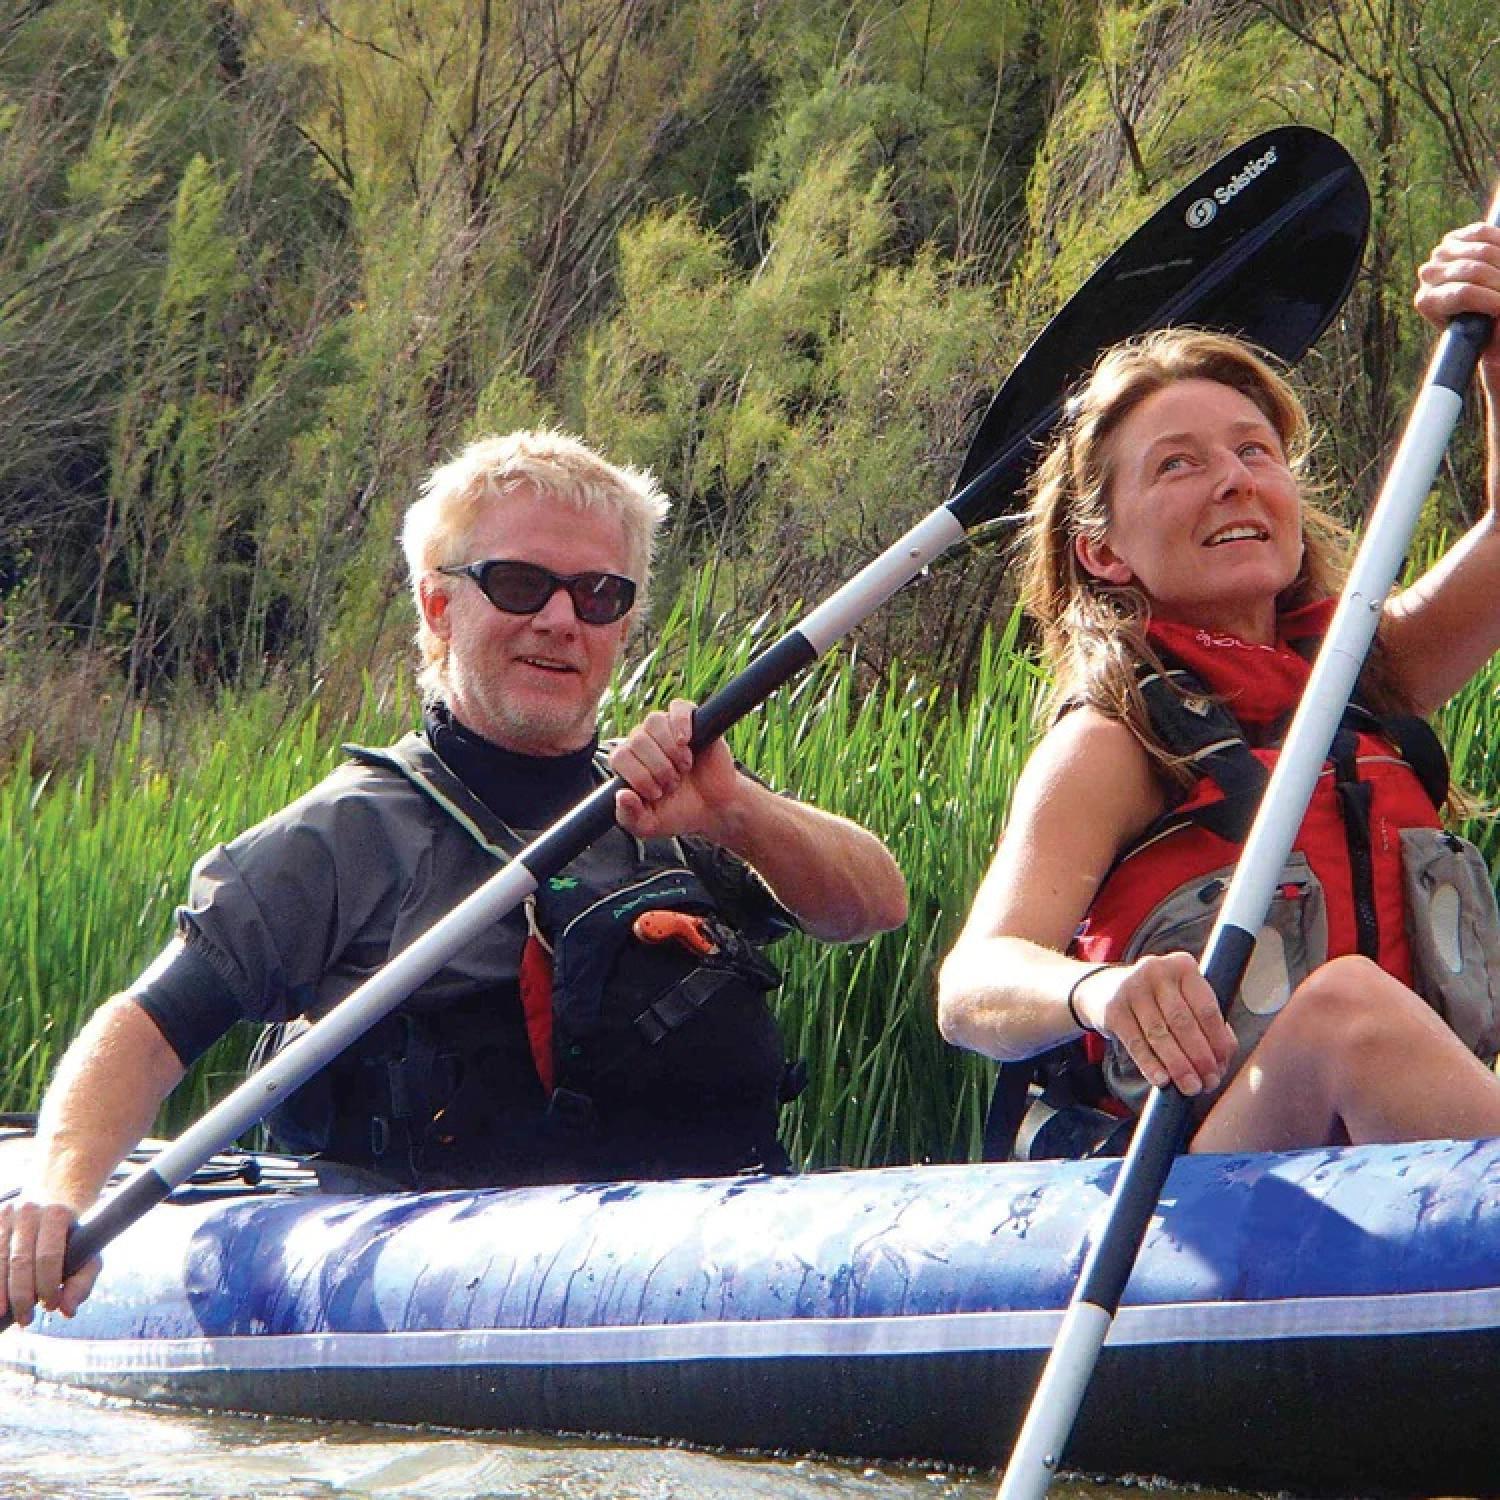 Solstice Durango Inflatable Kayak